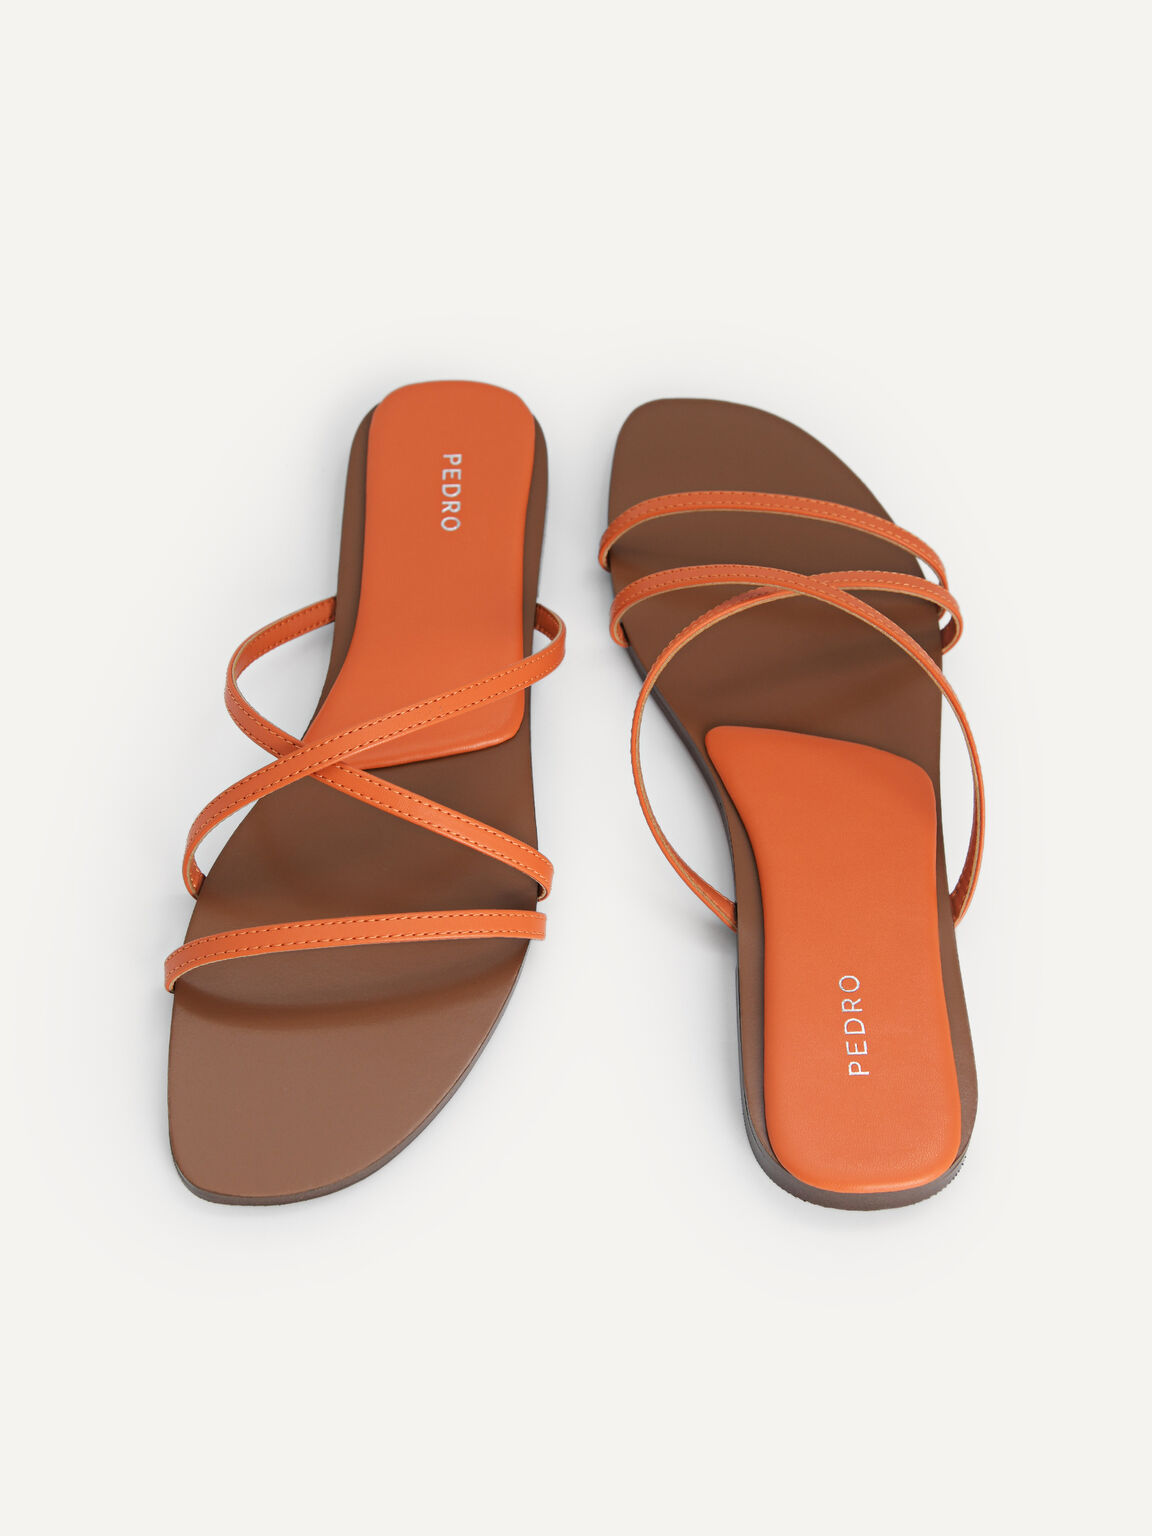 Criss-Cross Strappy Sandals, Orange